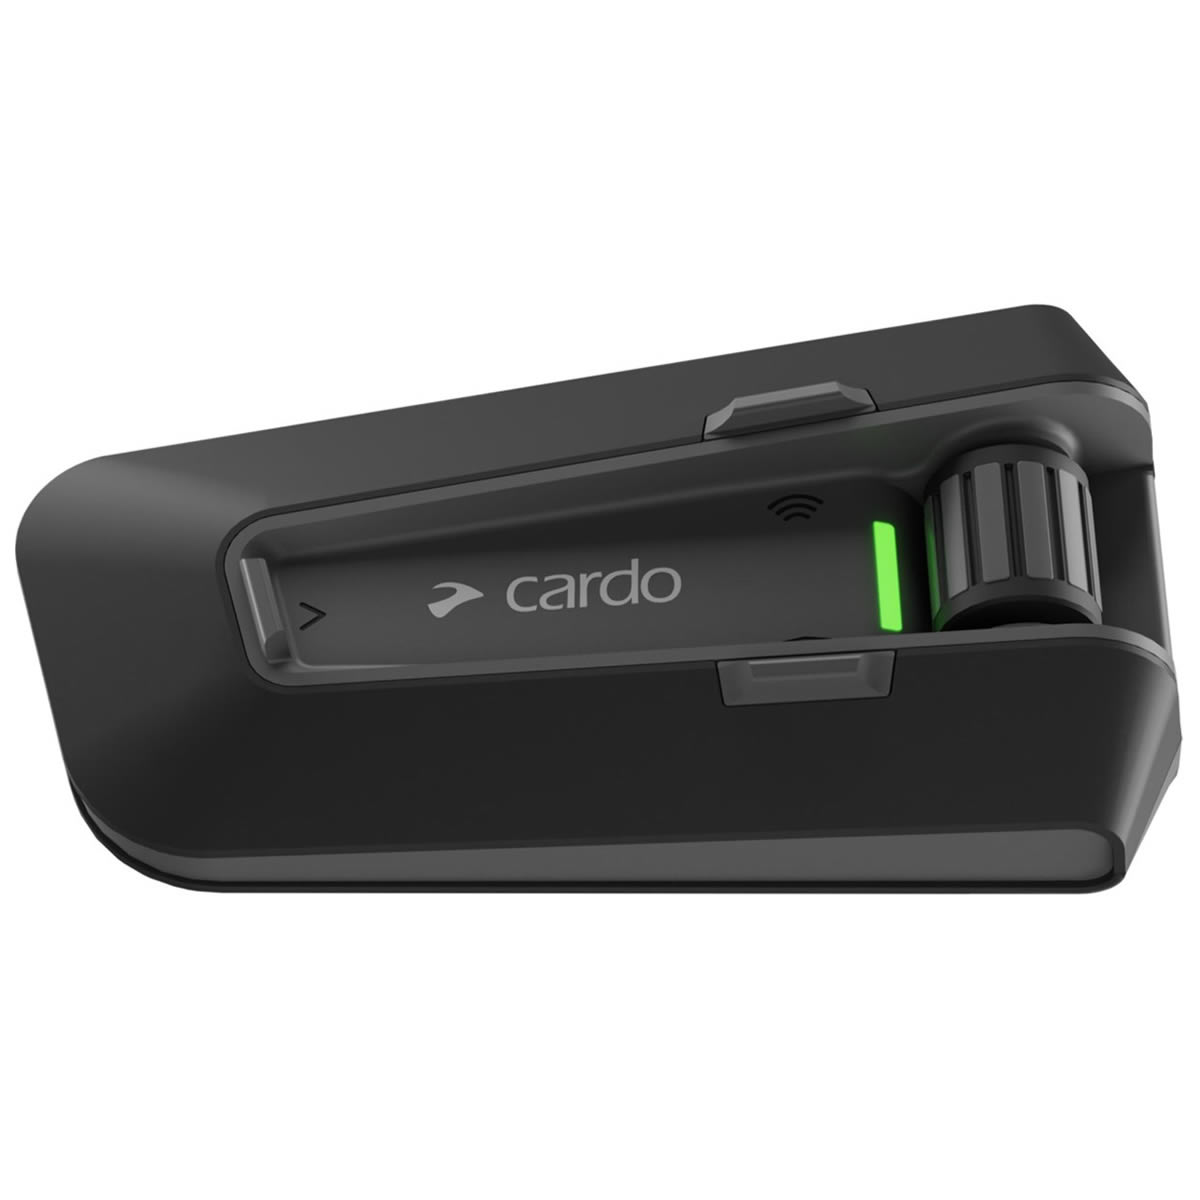 Cardo Kommunikationssystem Packtalk Neo Einzelset